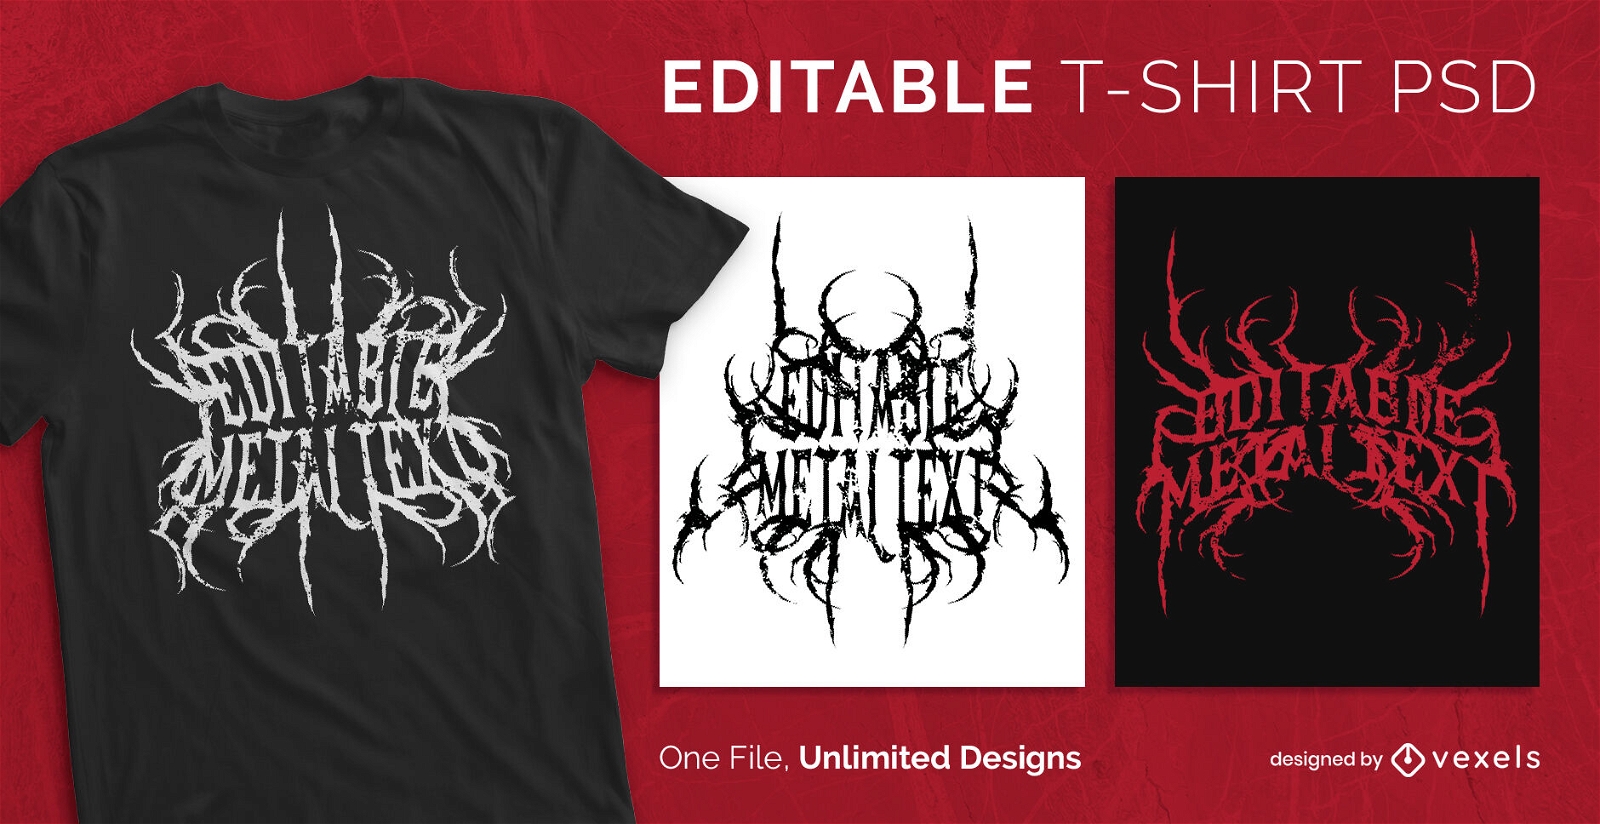 Skalierbares Death Metal T-Shirt PSD